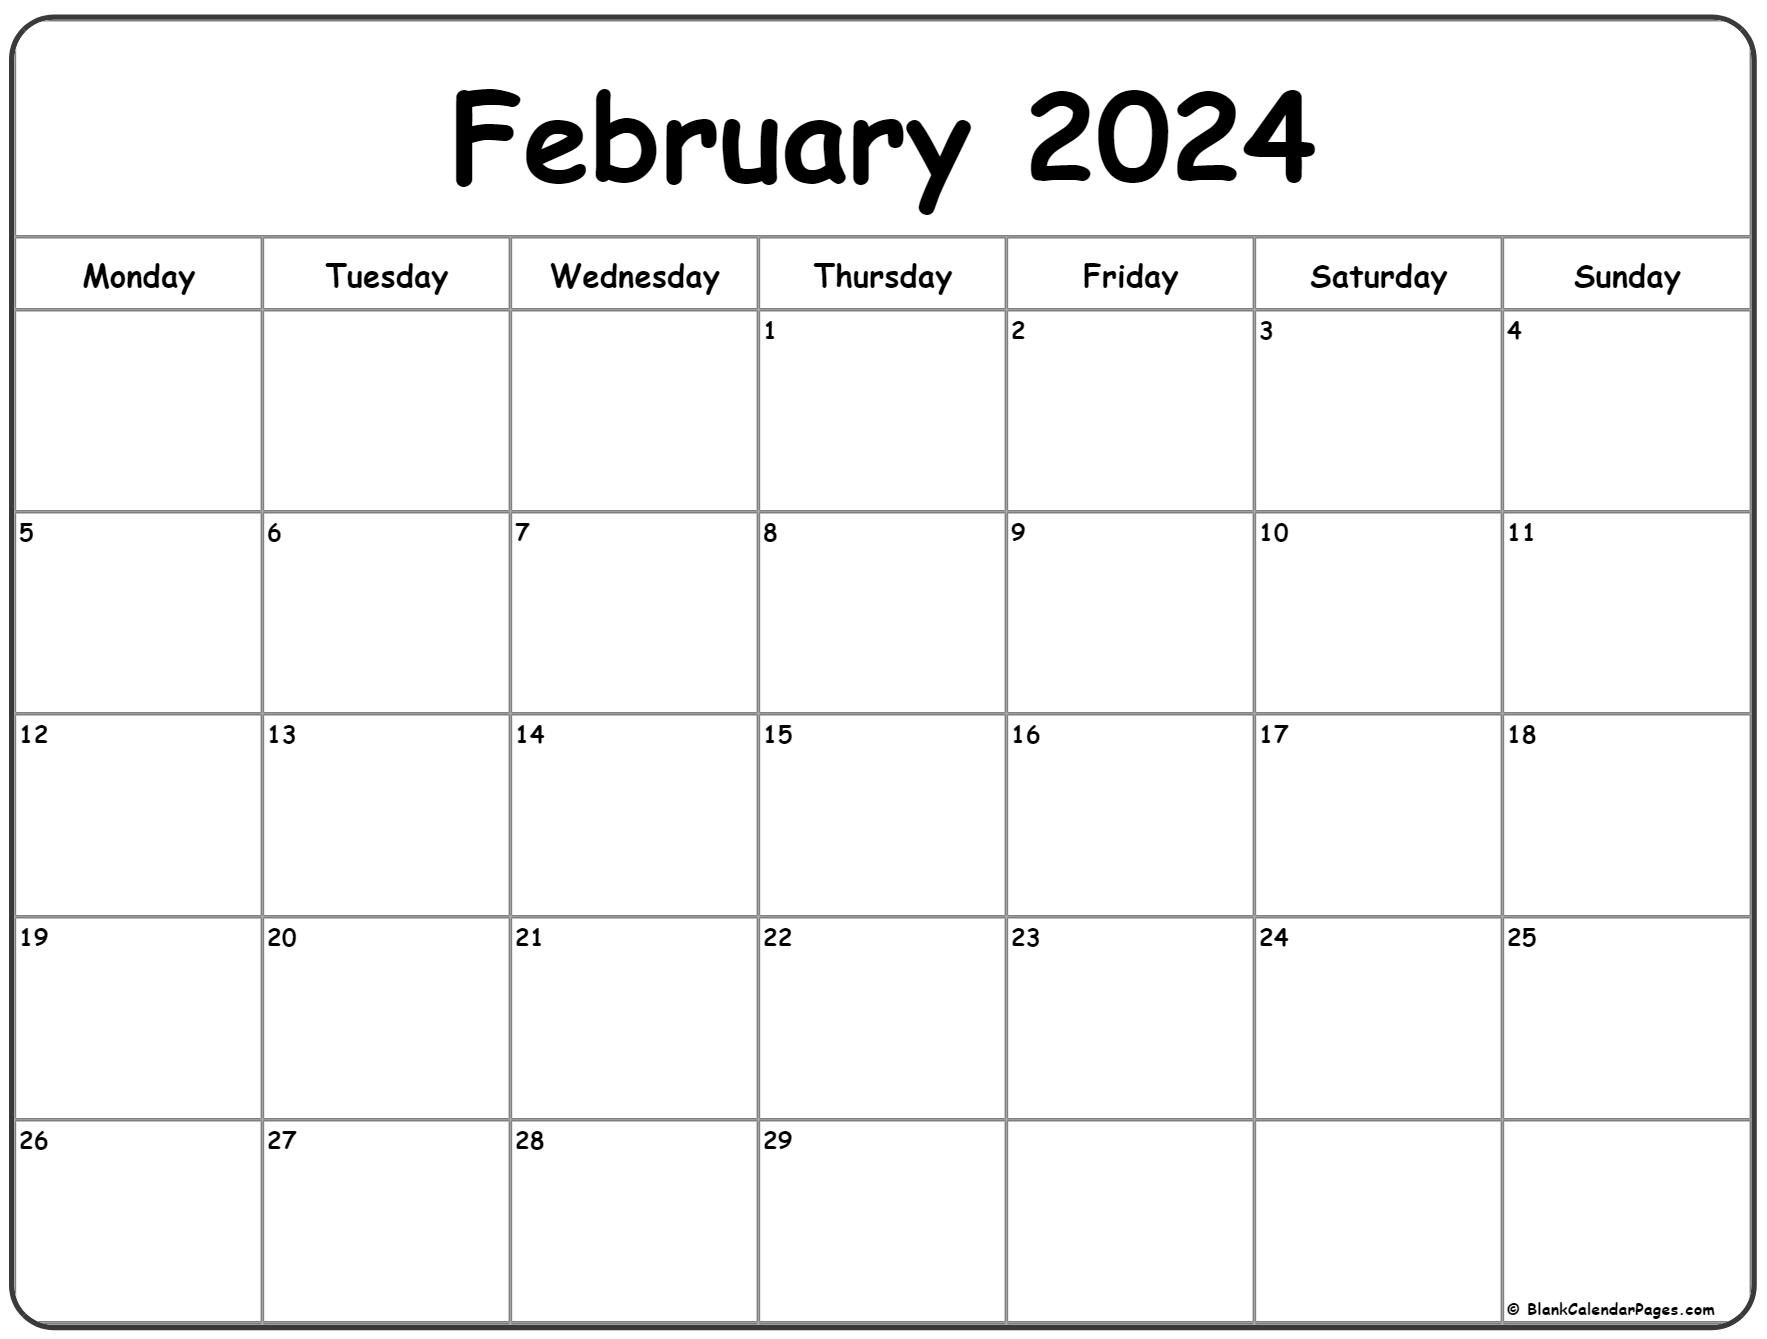 February 2022 Blank Calendar February 2022 Monday Calendar | Monday To Sunday